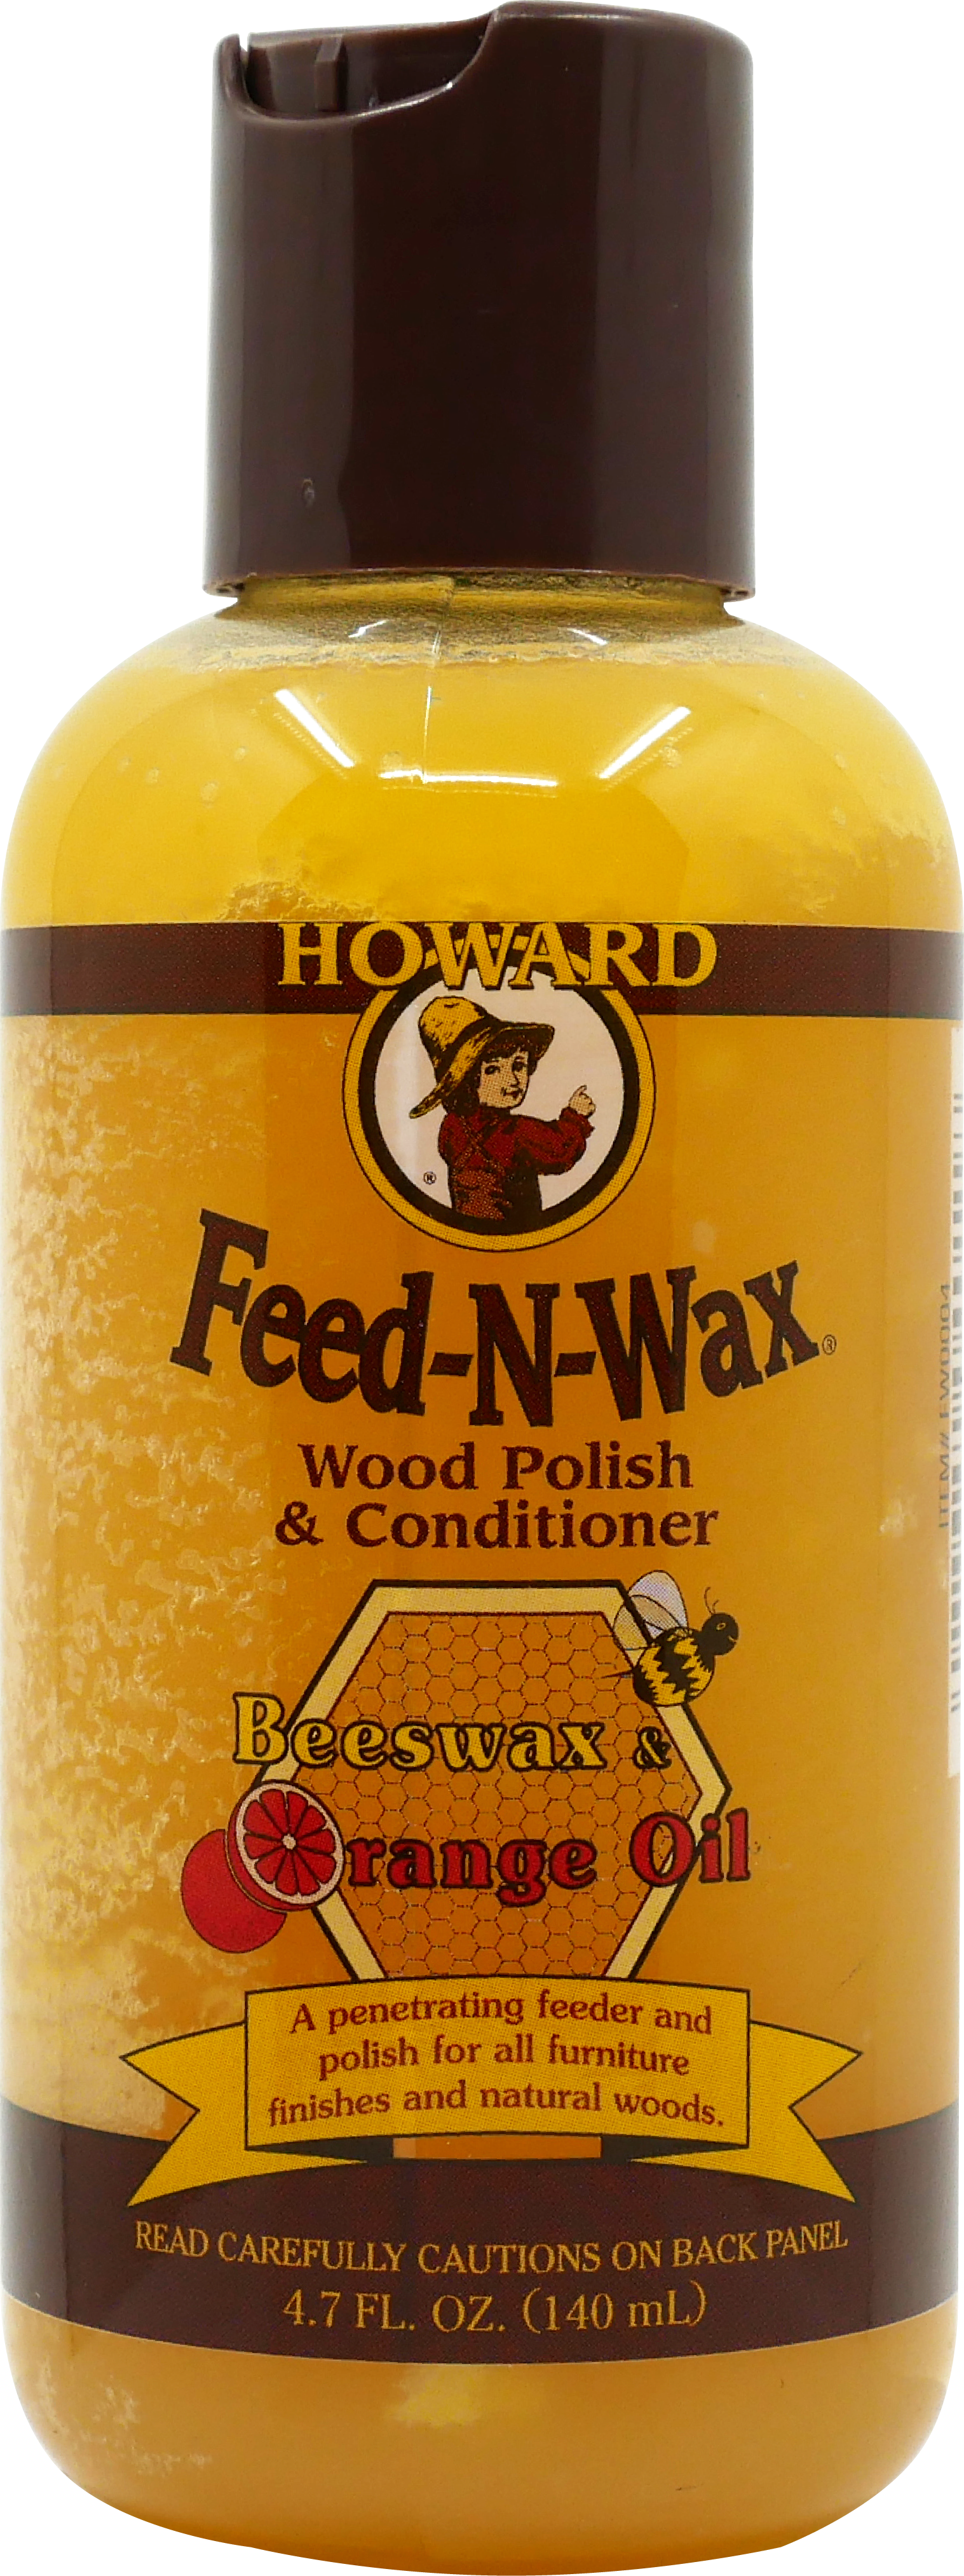 Howard Feed-N-Wax Oil-Based Wood Polish & Conditioner Clear 16 oz.  #VSHE1055193, FW0016